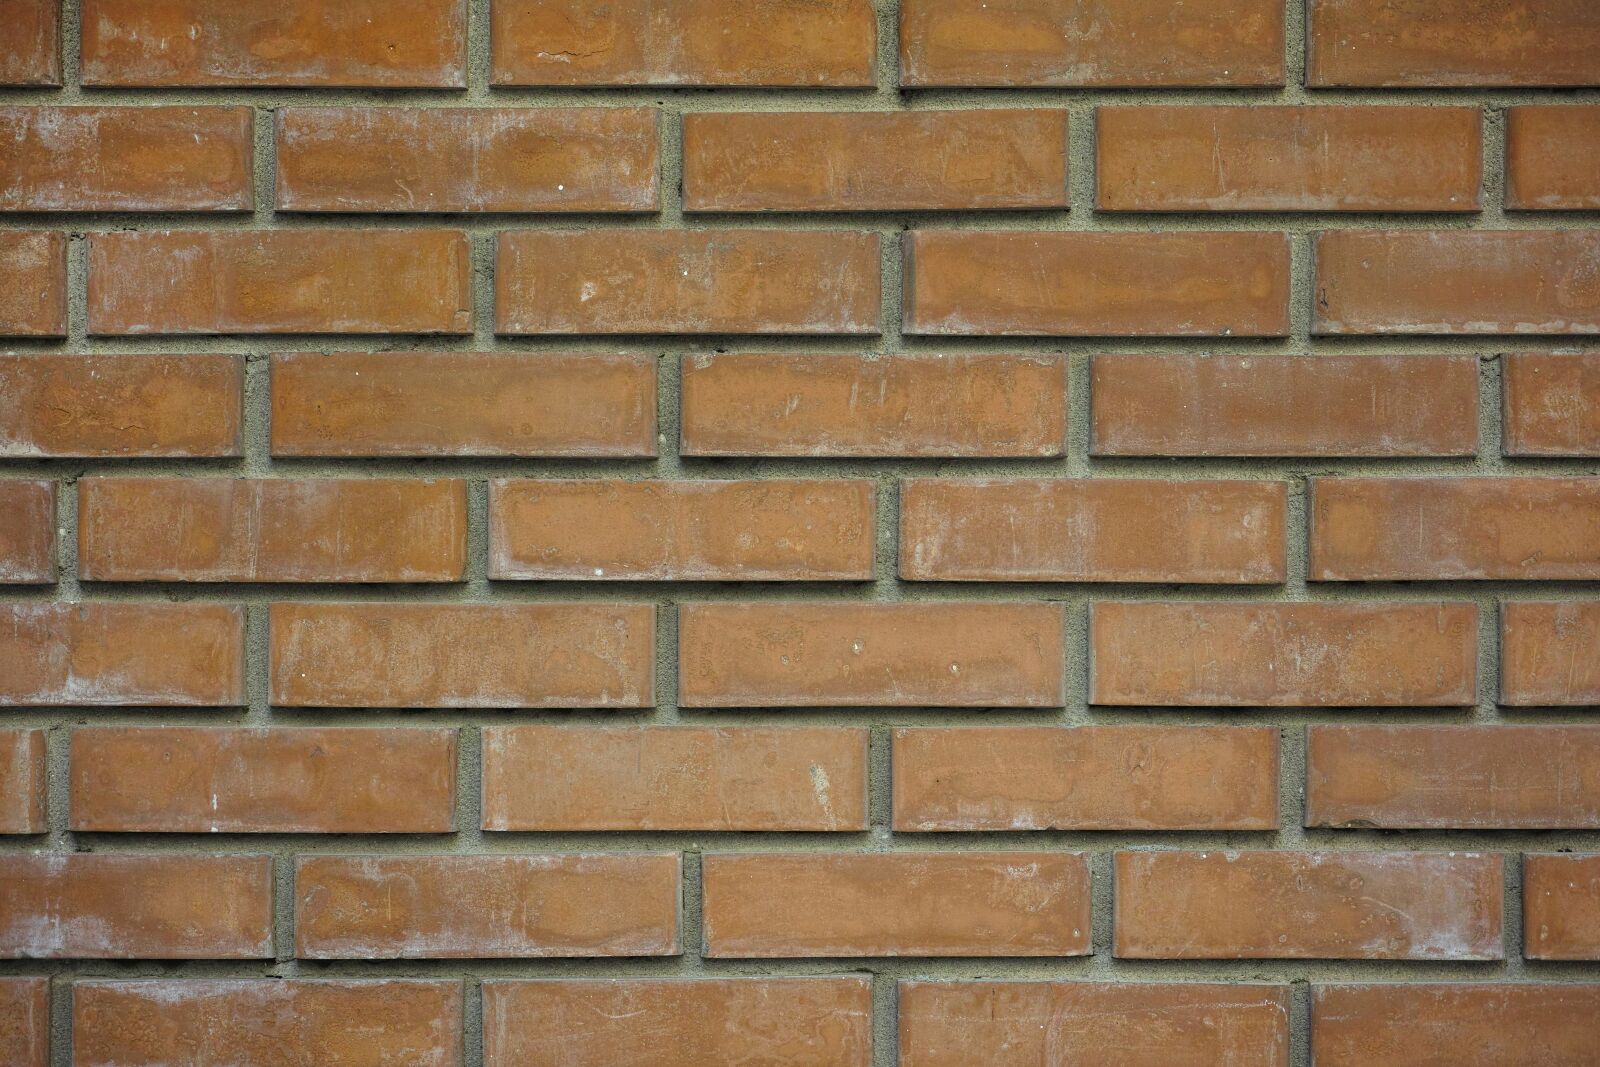 Sigma DP3 Merrill sample photo. Brick, wall, texture photography